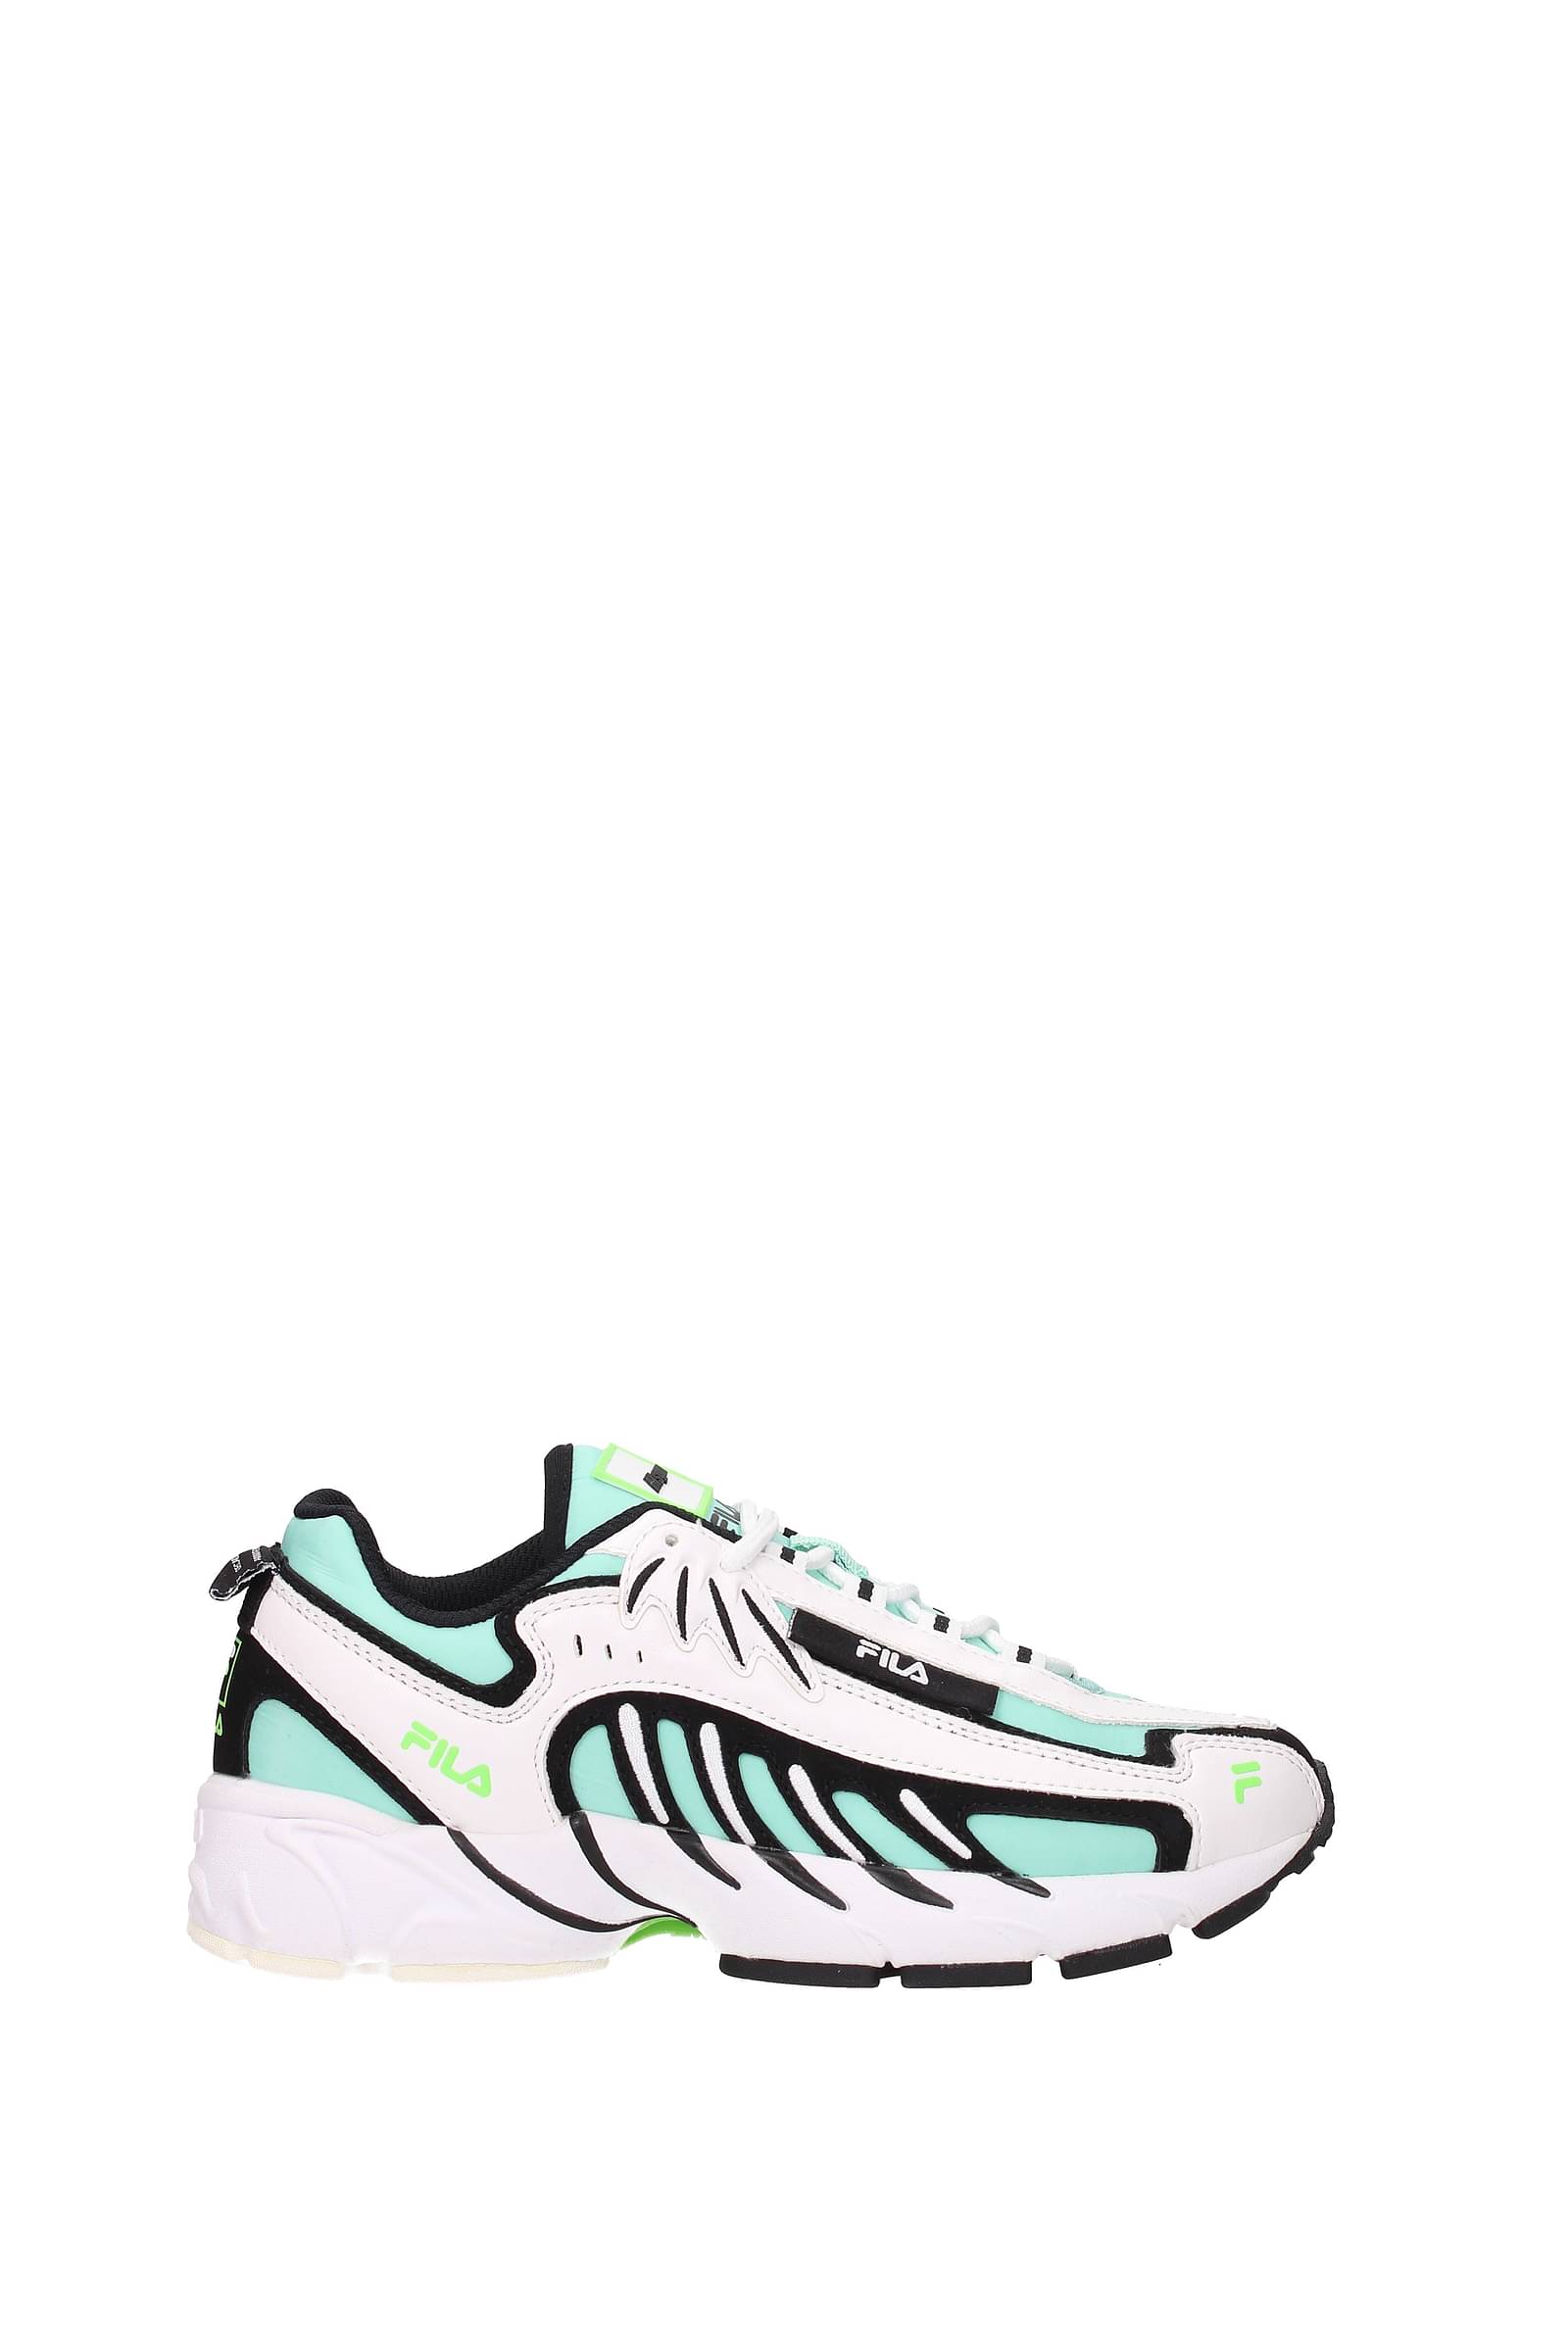 MSGM-Sneakers x fila Tessuto Bianco Verde Acqua-Donna